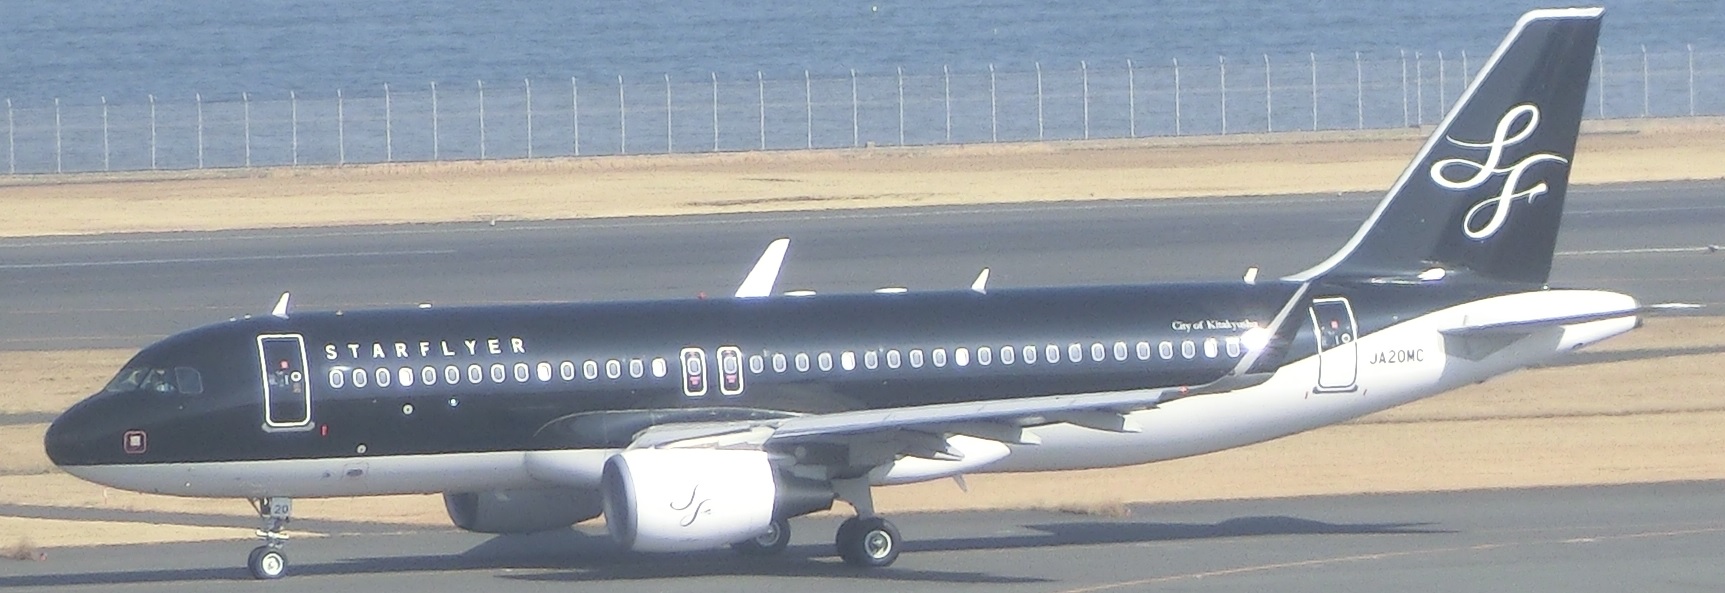 A320JA20MC.jpg